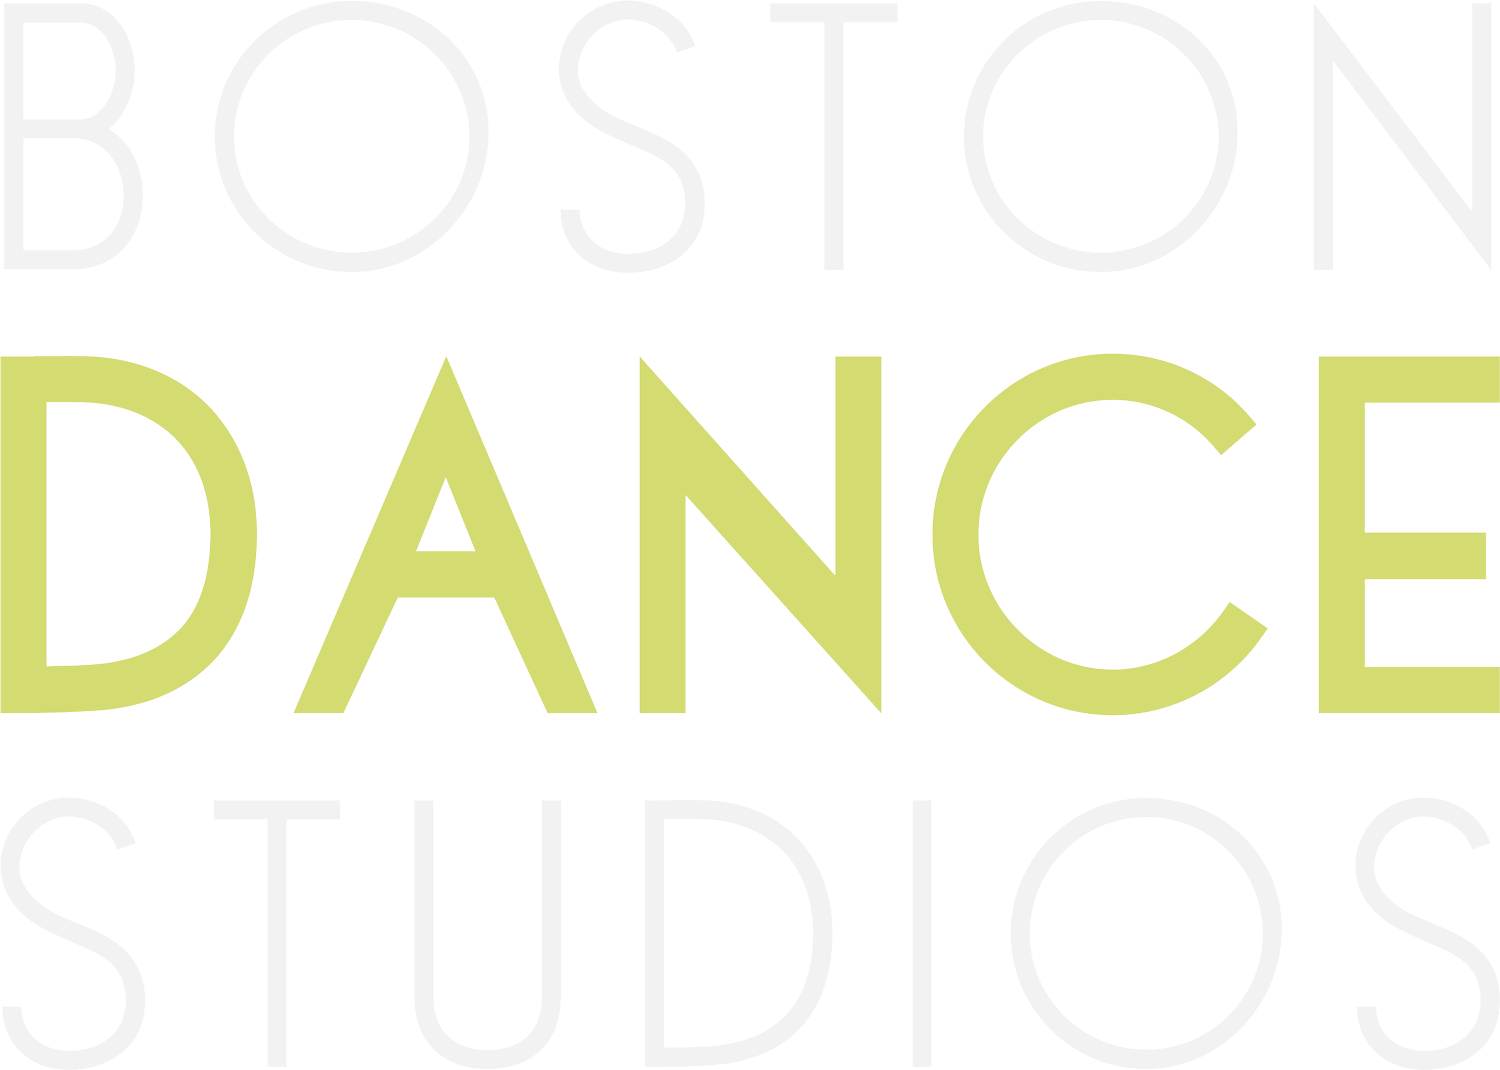 Boston Dance Studios